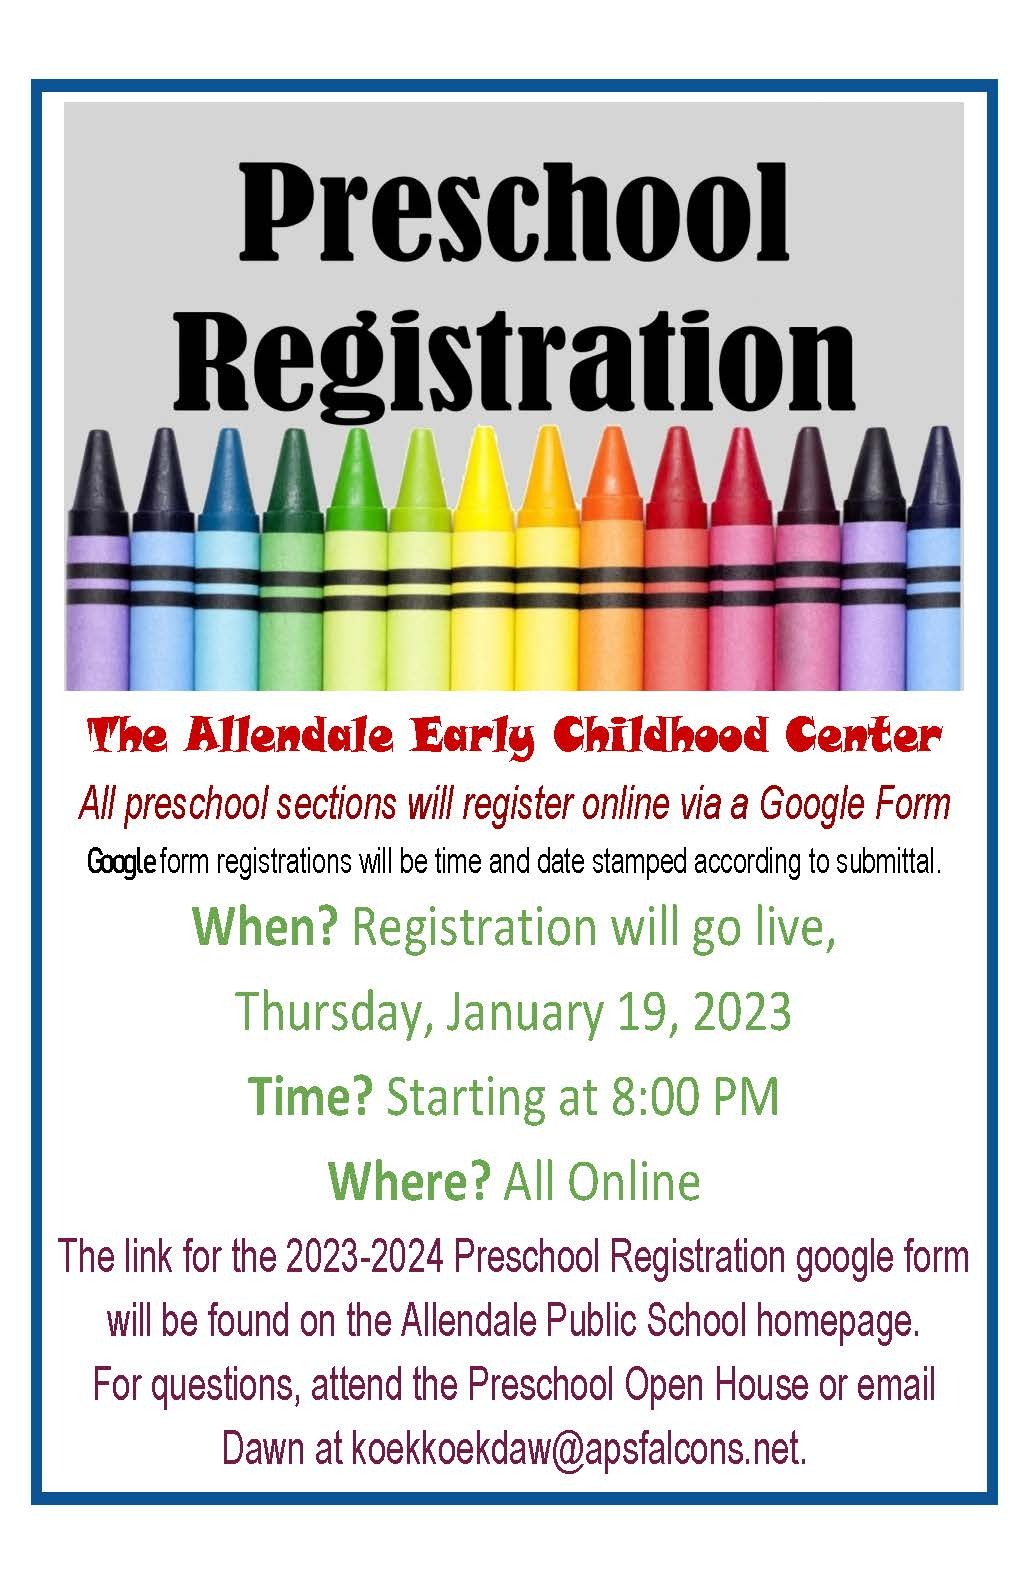 Preschool Registration flier